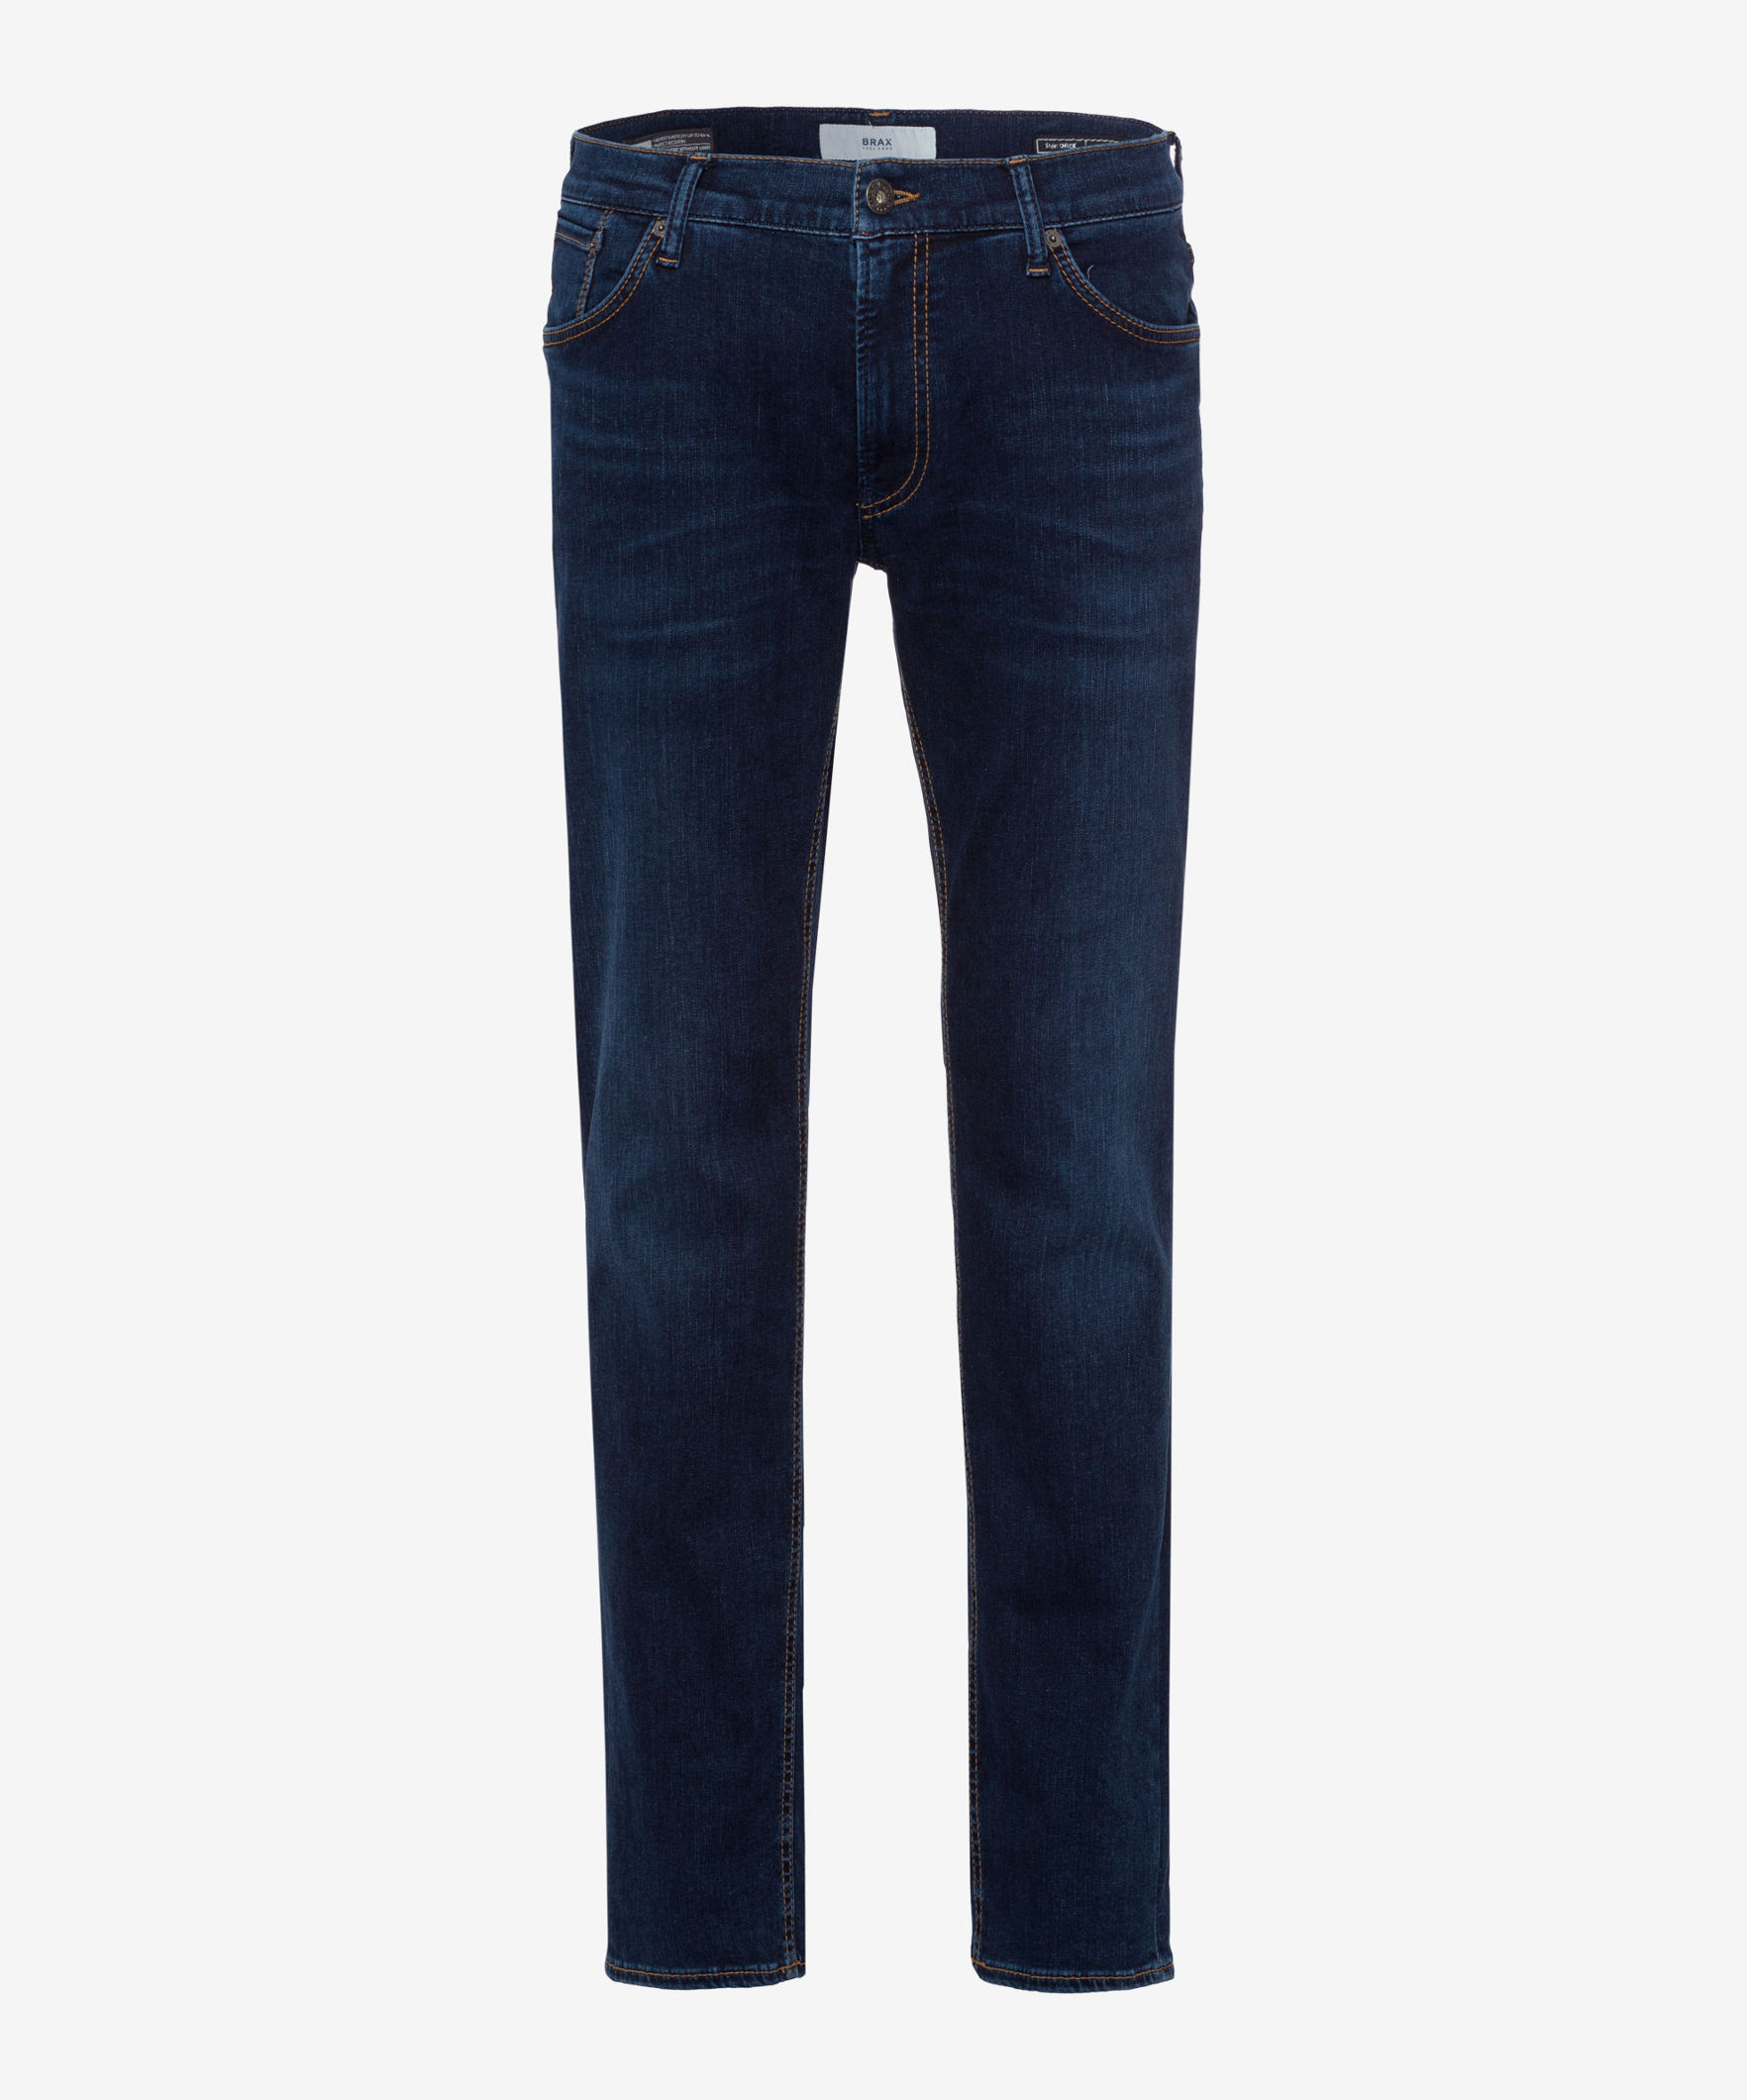 Brax Chuck Hi-Flex Jeans Vintage Blue Used | Jan Rozing Men\'s Fashion